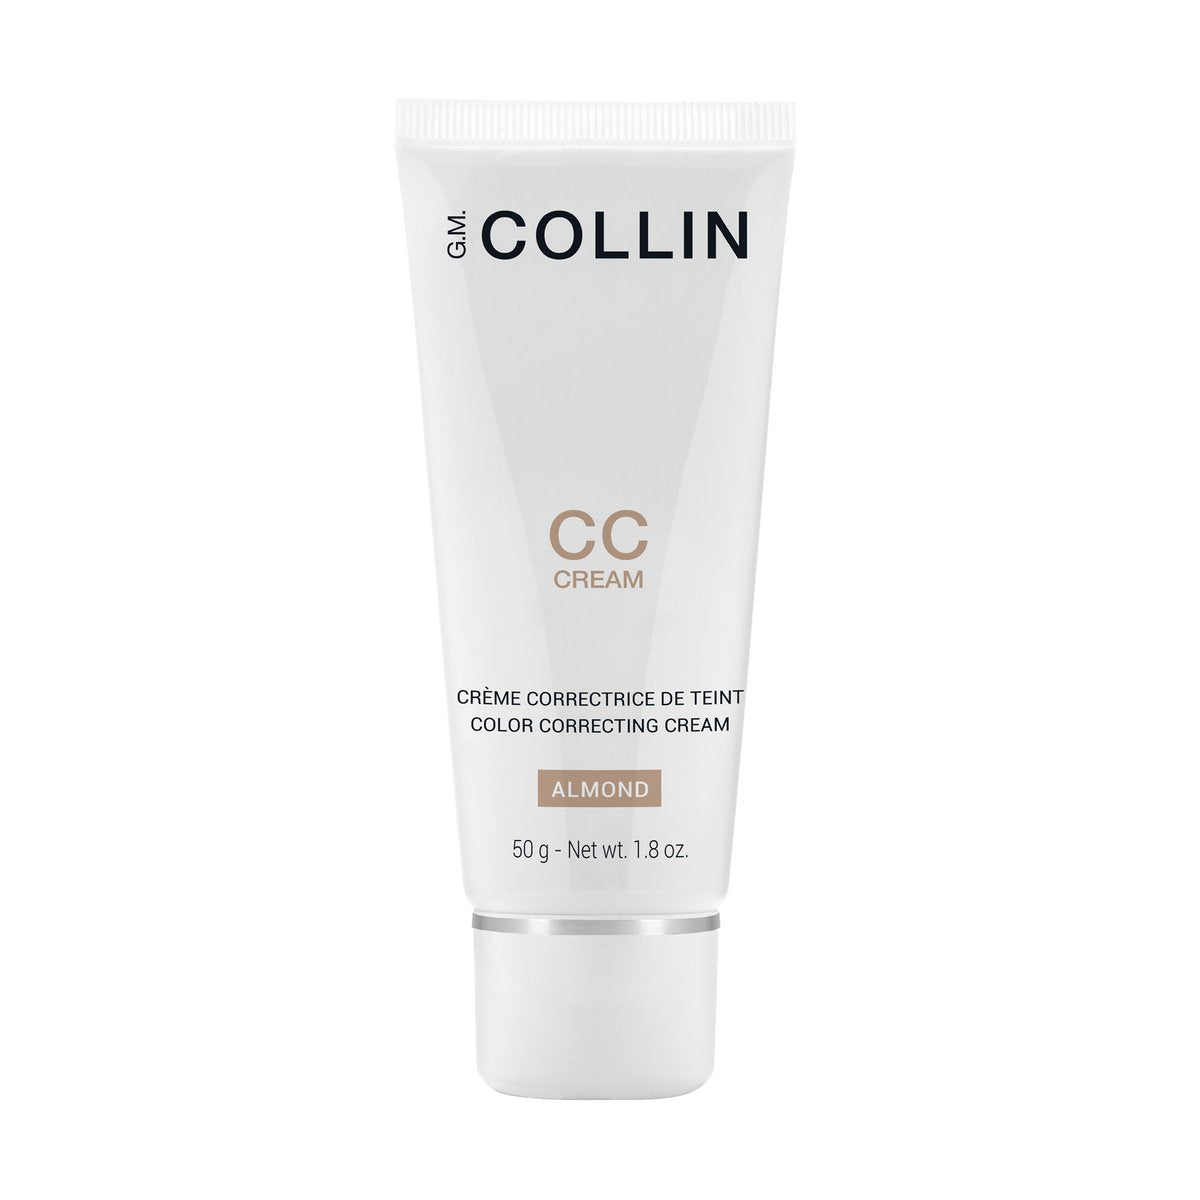 G.M. COLLIN CC Cream 50g - Almond